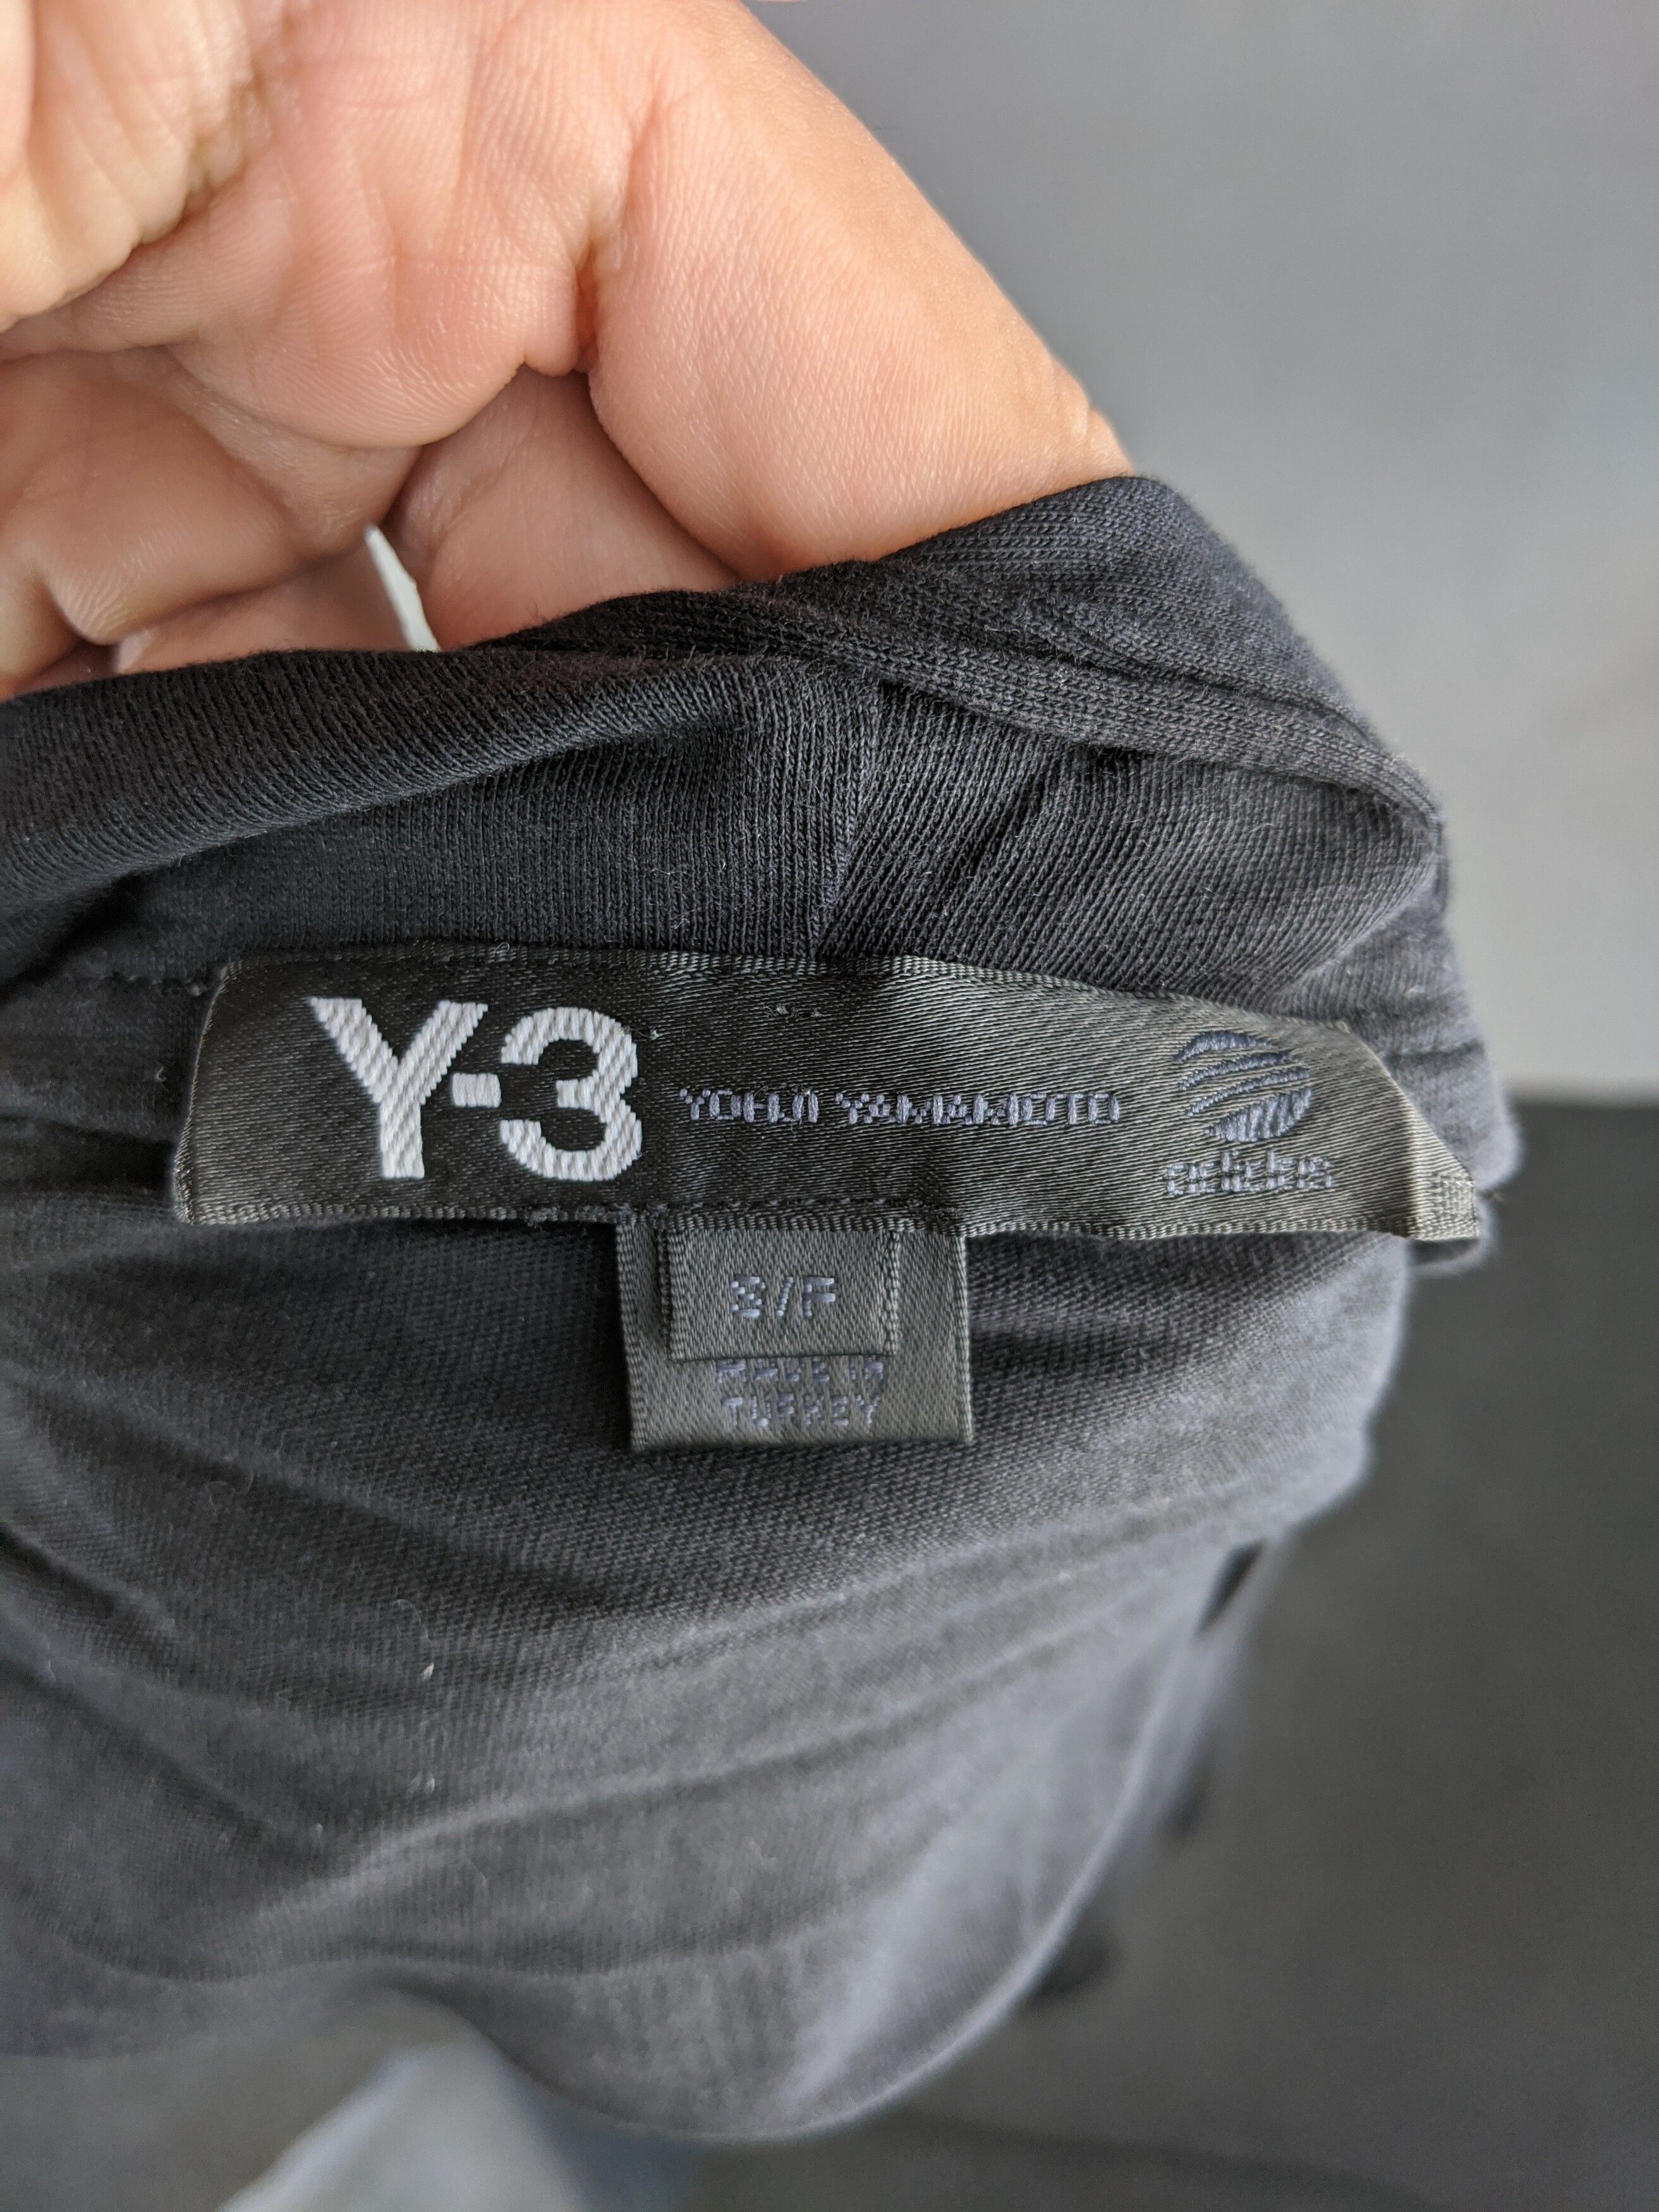 Adidas Y3 Yohji Yamamoto Adidas Cocoon Oversize Hoodie Sweater Size US XL / EU 56 / 4 - 3 Preview